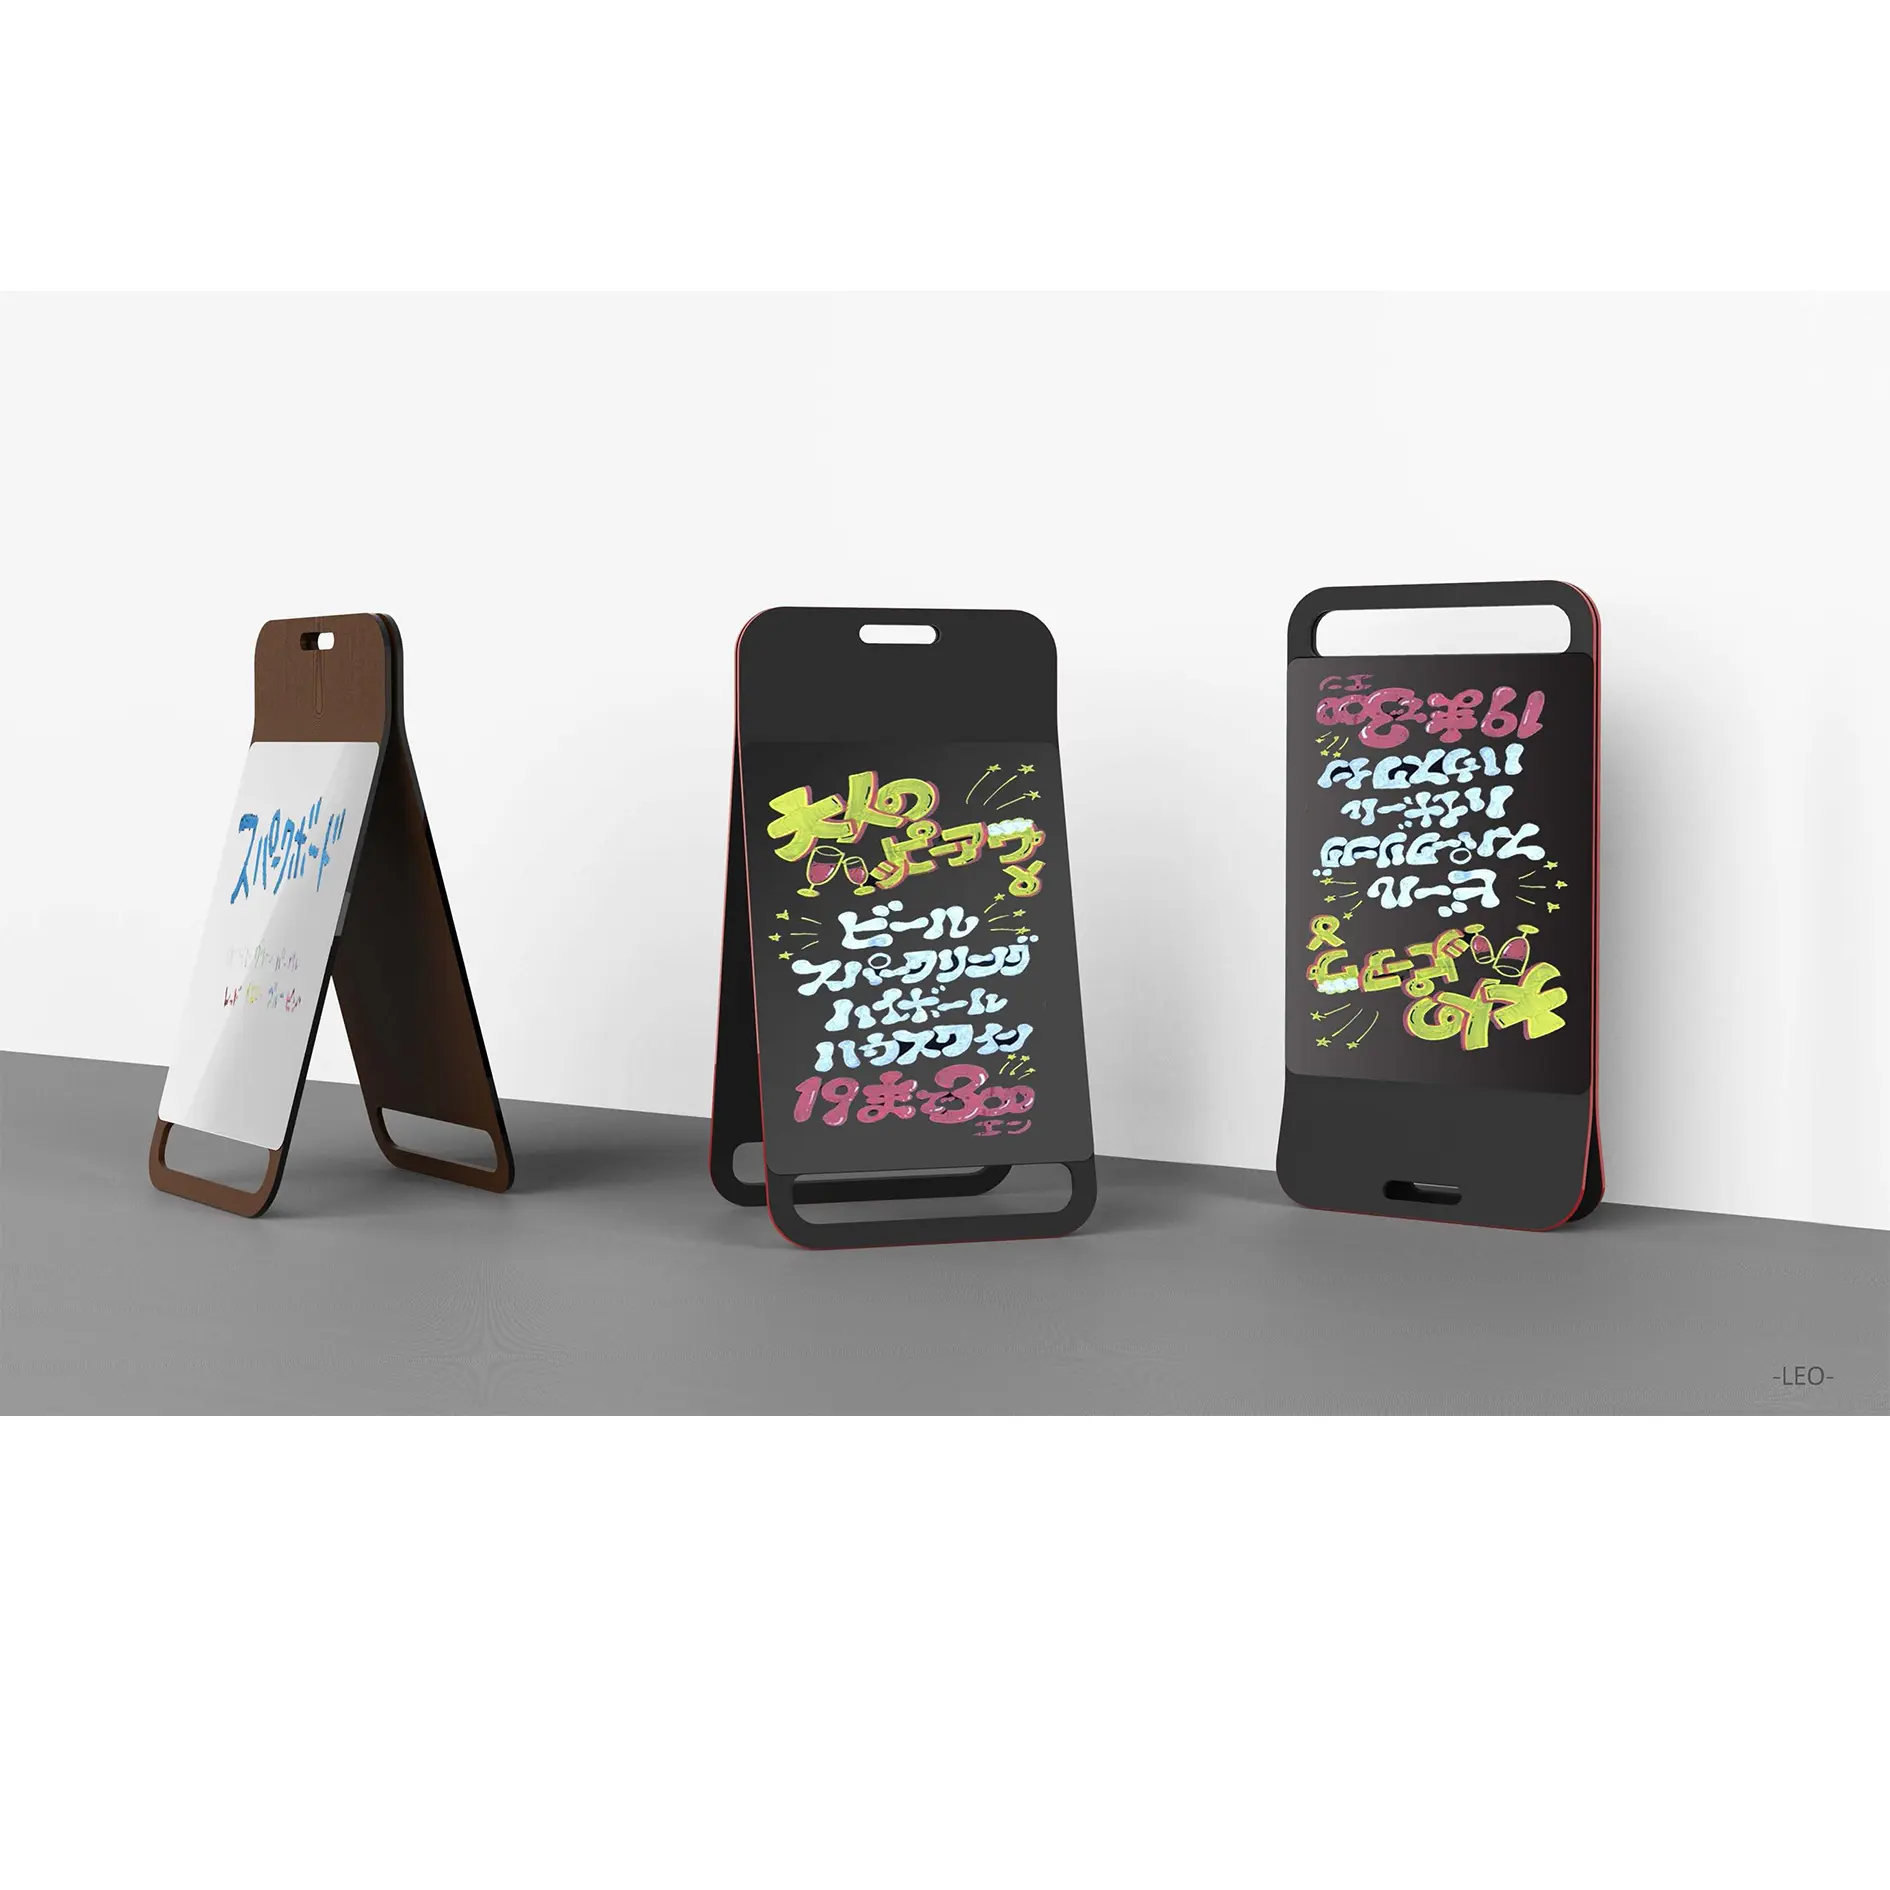 Wood Poster Board for Shop Folding Portable Black Board for Child Learning Restaurant Menu Advertising Board